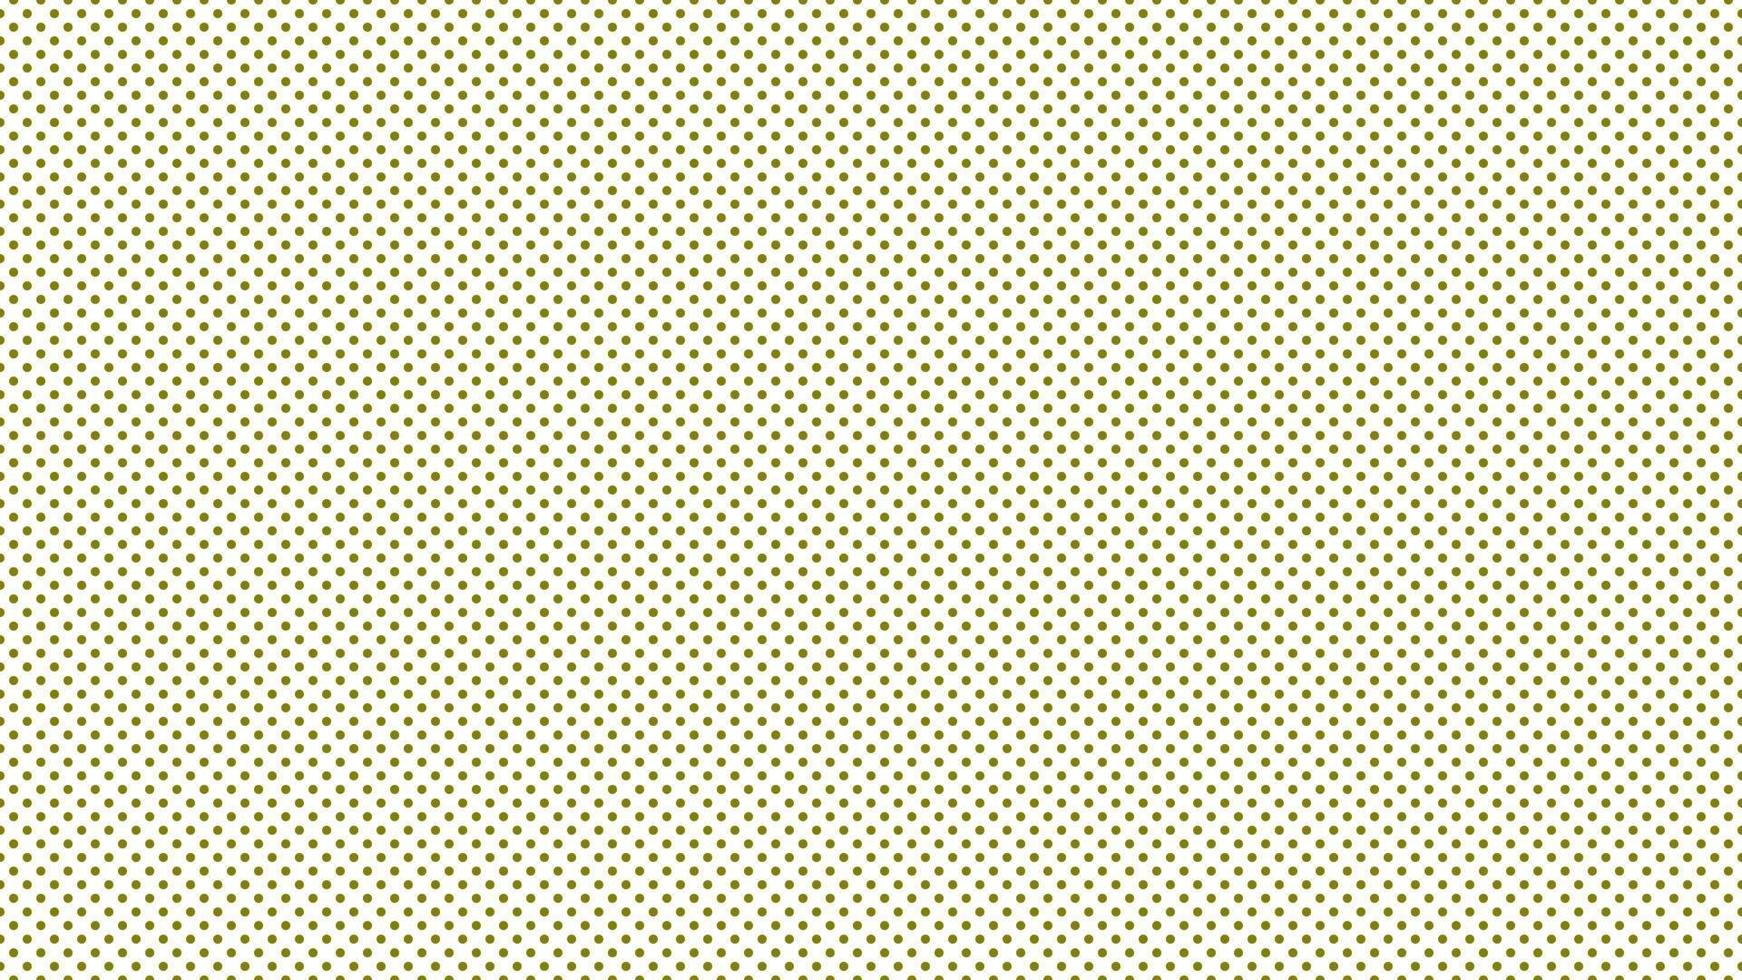 olive green color polka dots background vector